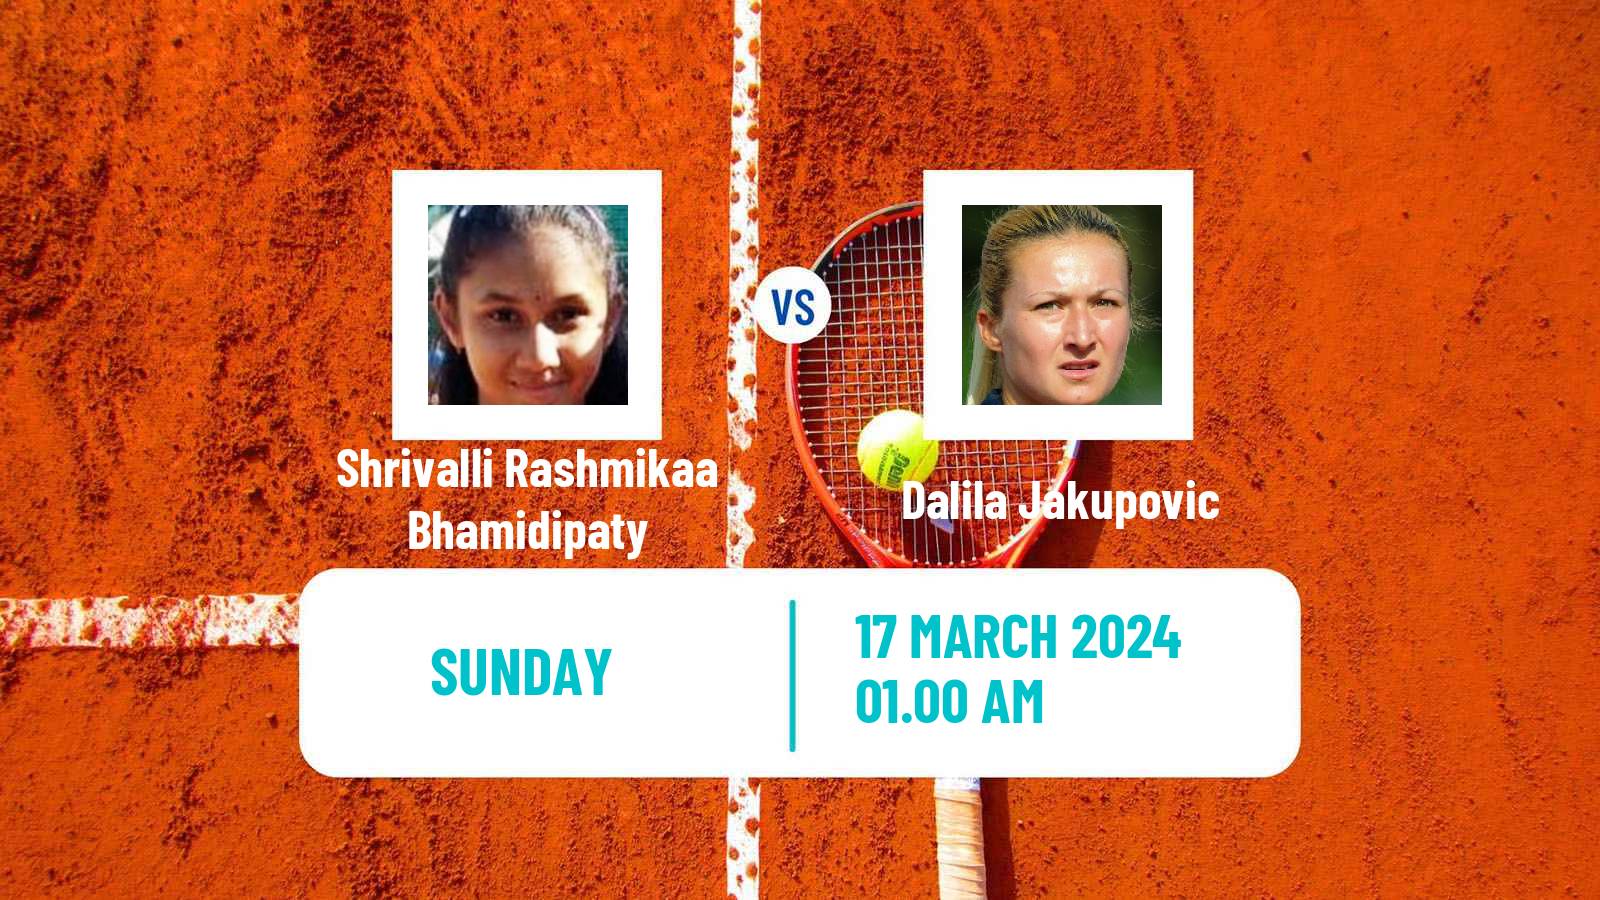 Tennis ITF W35 Indore Women Shrivalli Rashmikaa Bhamidipaty - Dalila Jakupovic